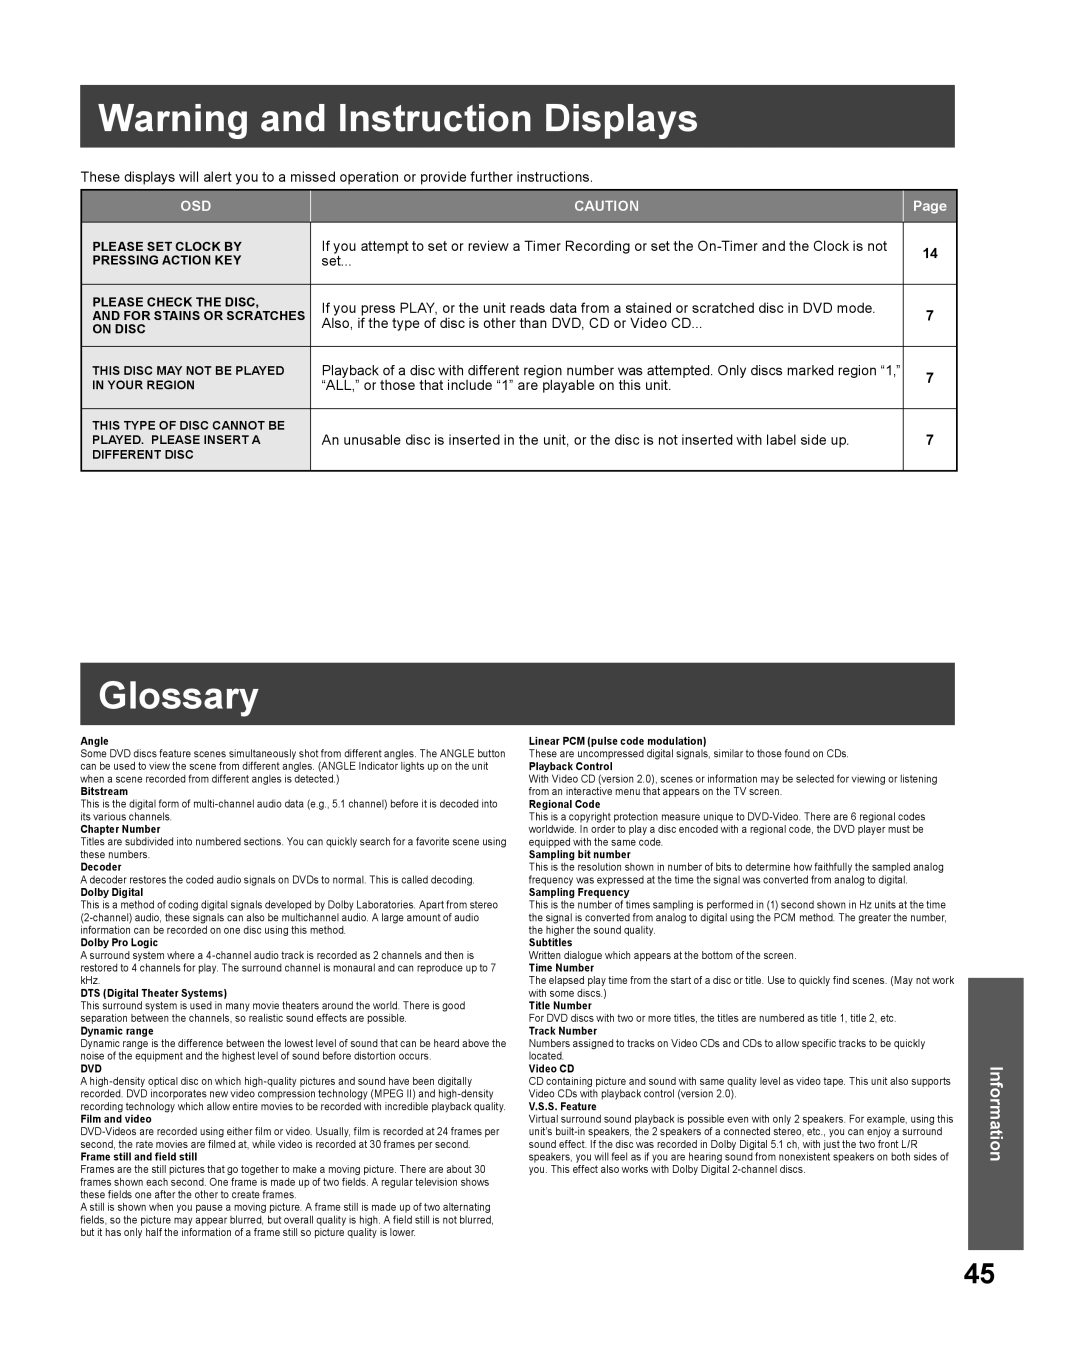 Panasonic PV-27DF5 manual Warning and Instruction Displays, Glossary, Information, Page 